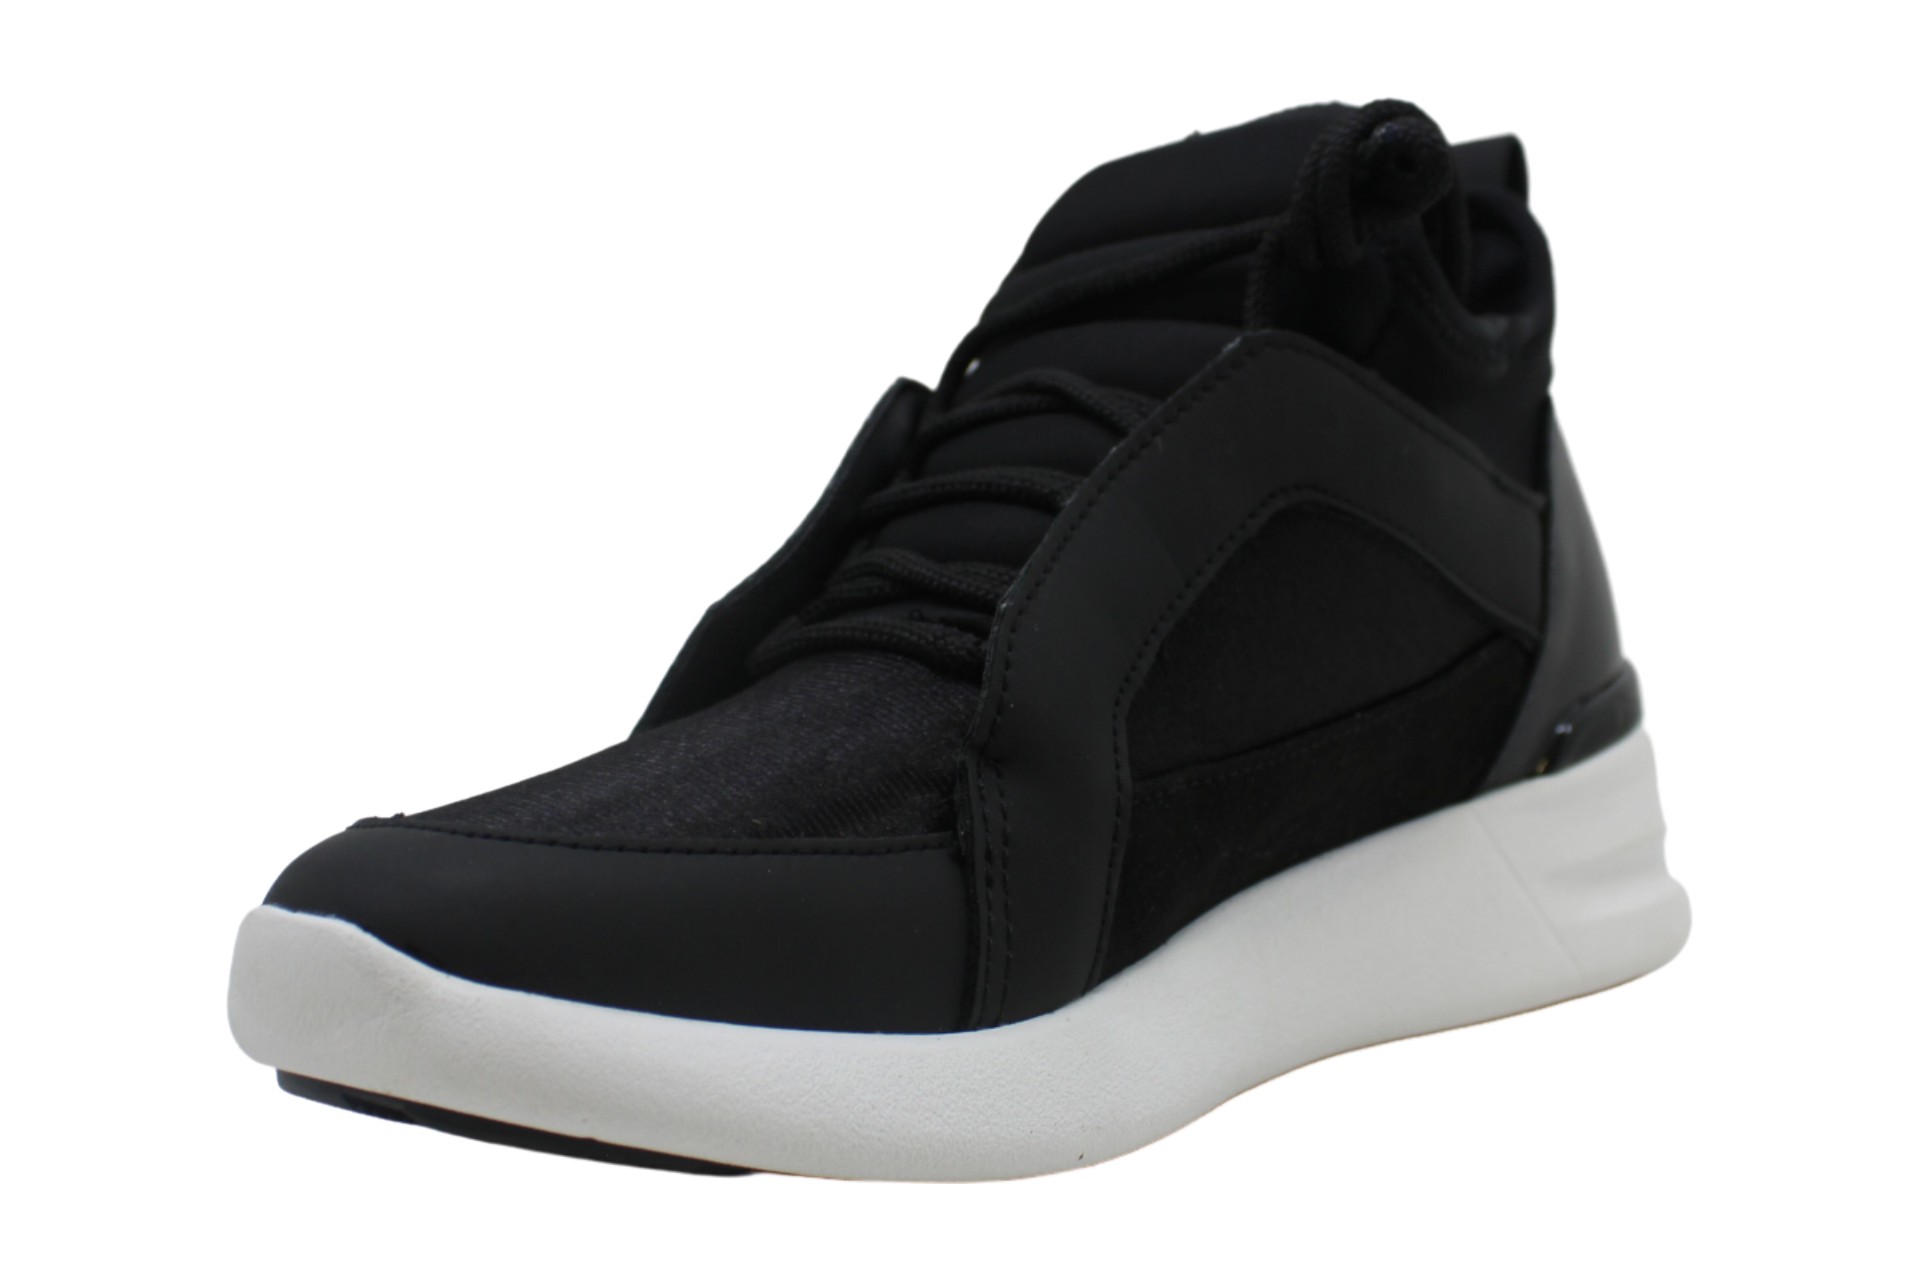 Aldo Womens Fashion Sneakers in Black Color, Size 7 NNE | eBay